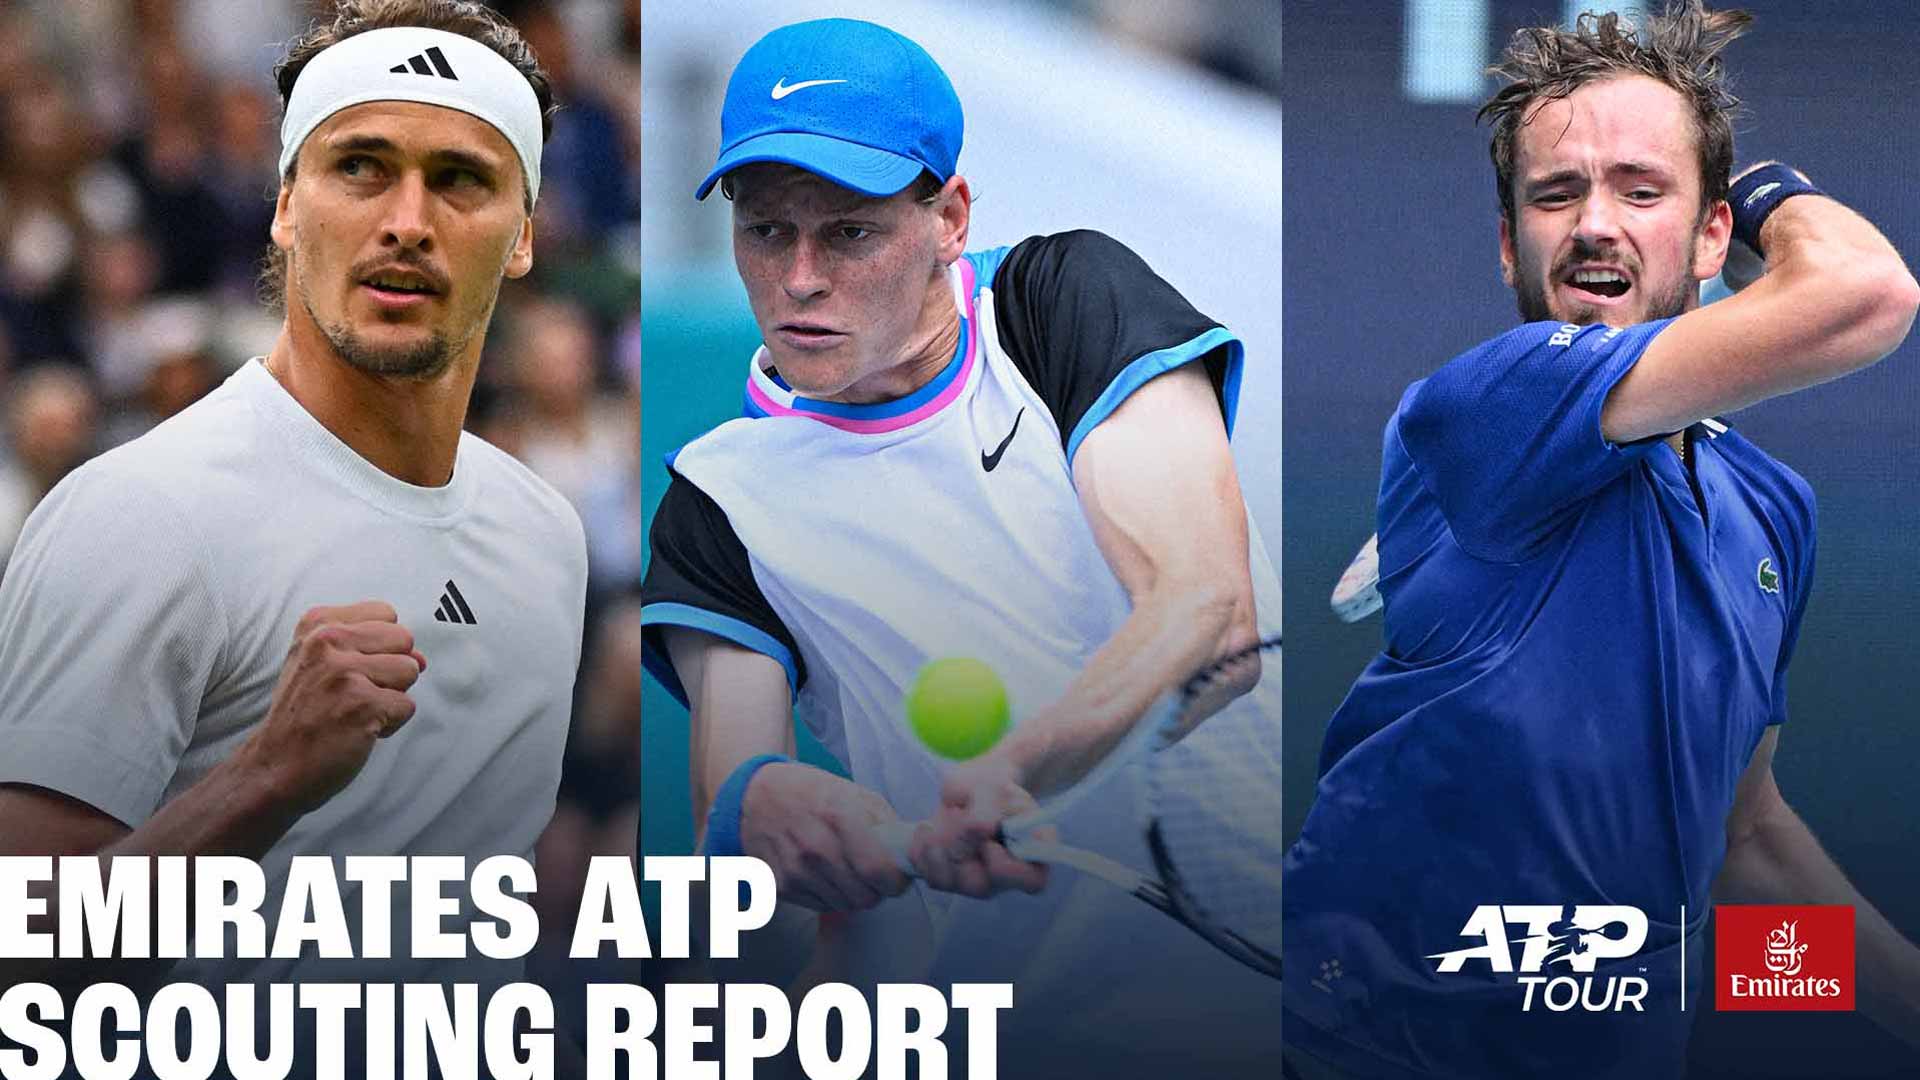 Alexander Zverev, Jannik Sinner and Daniil Medvedev are former champions at the Canadian ATP Masters 1000 event.